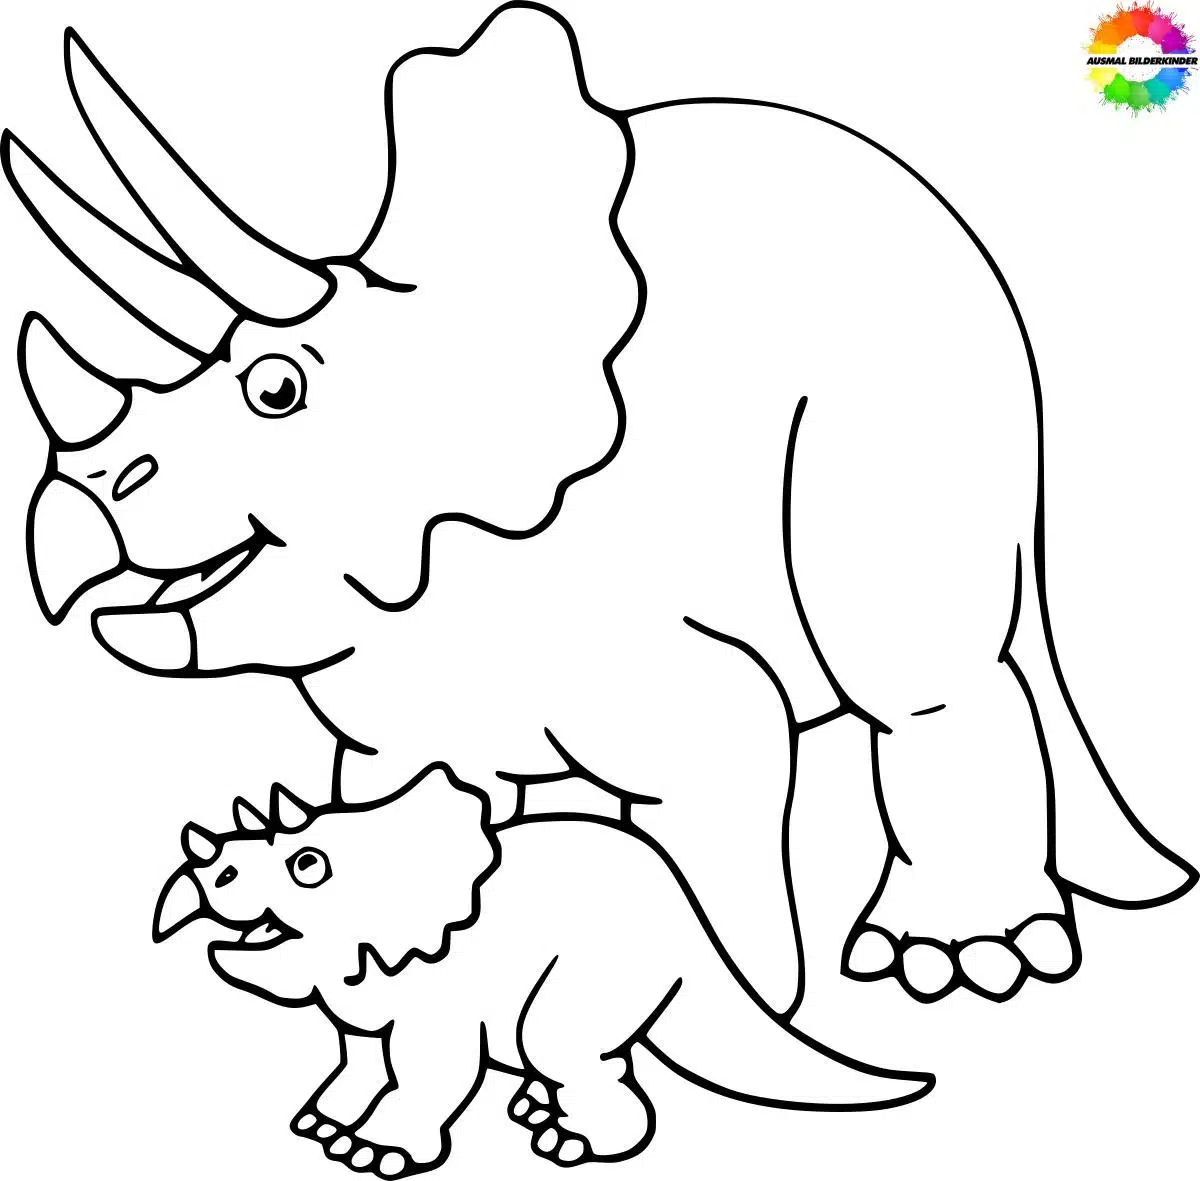 Triceratops 20